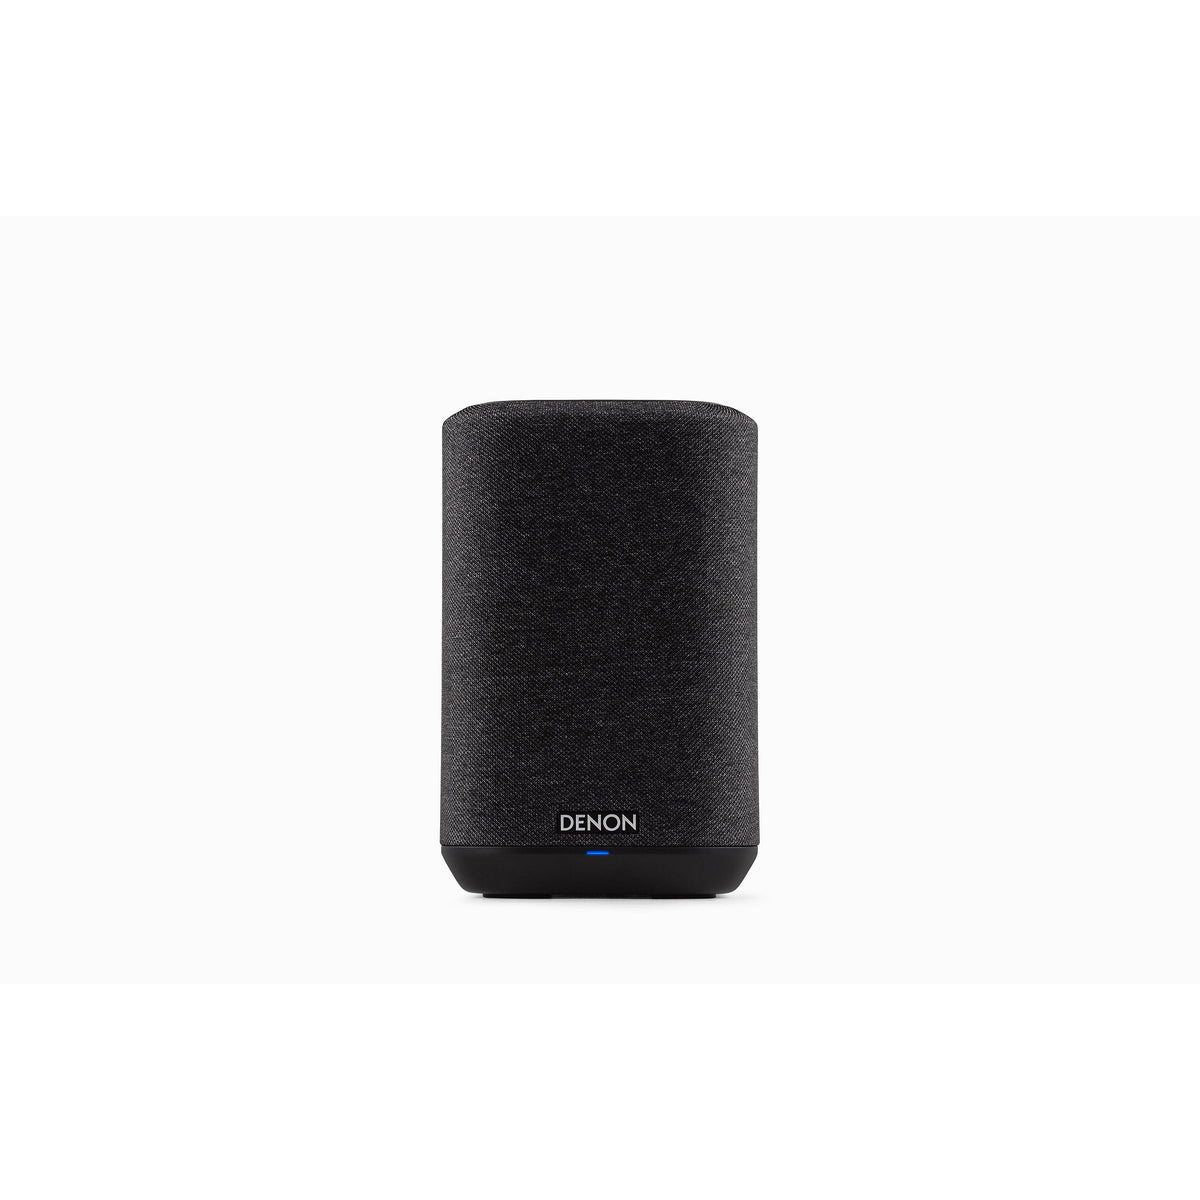 Denon Home 150 Compact Smart Speaker - Black | DENONHOME150BKE2GB from Denon - DID Electrical